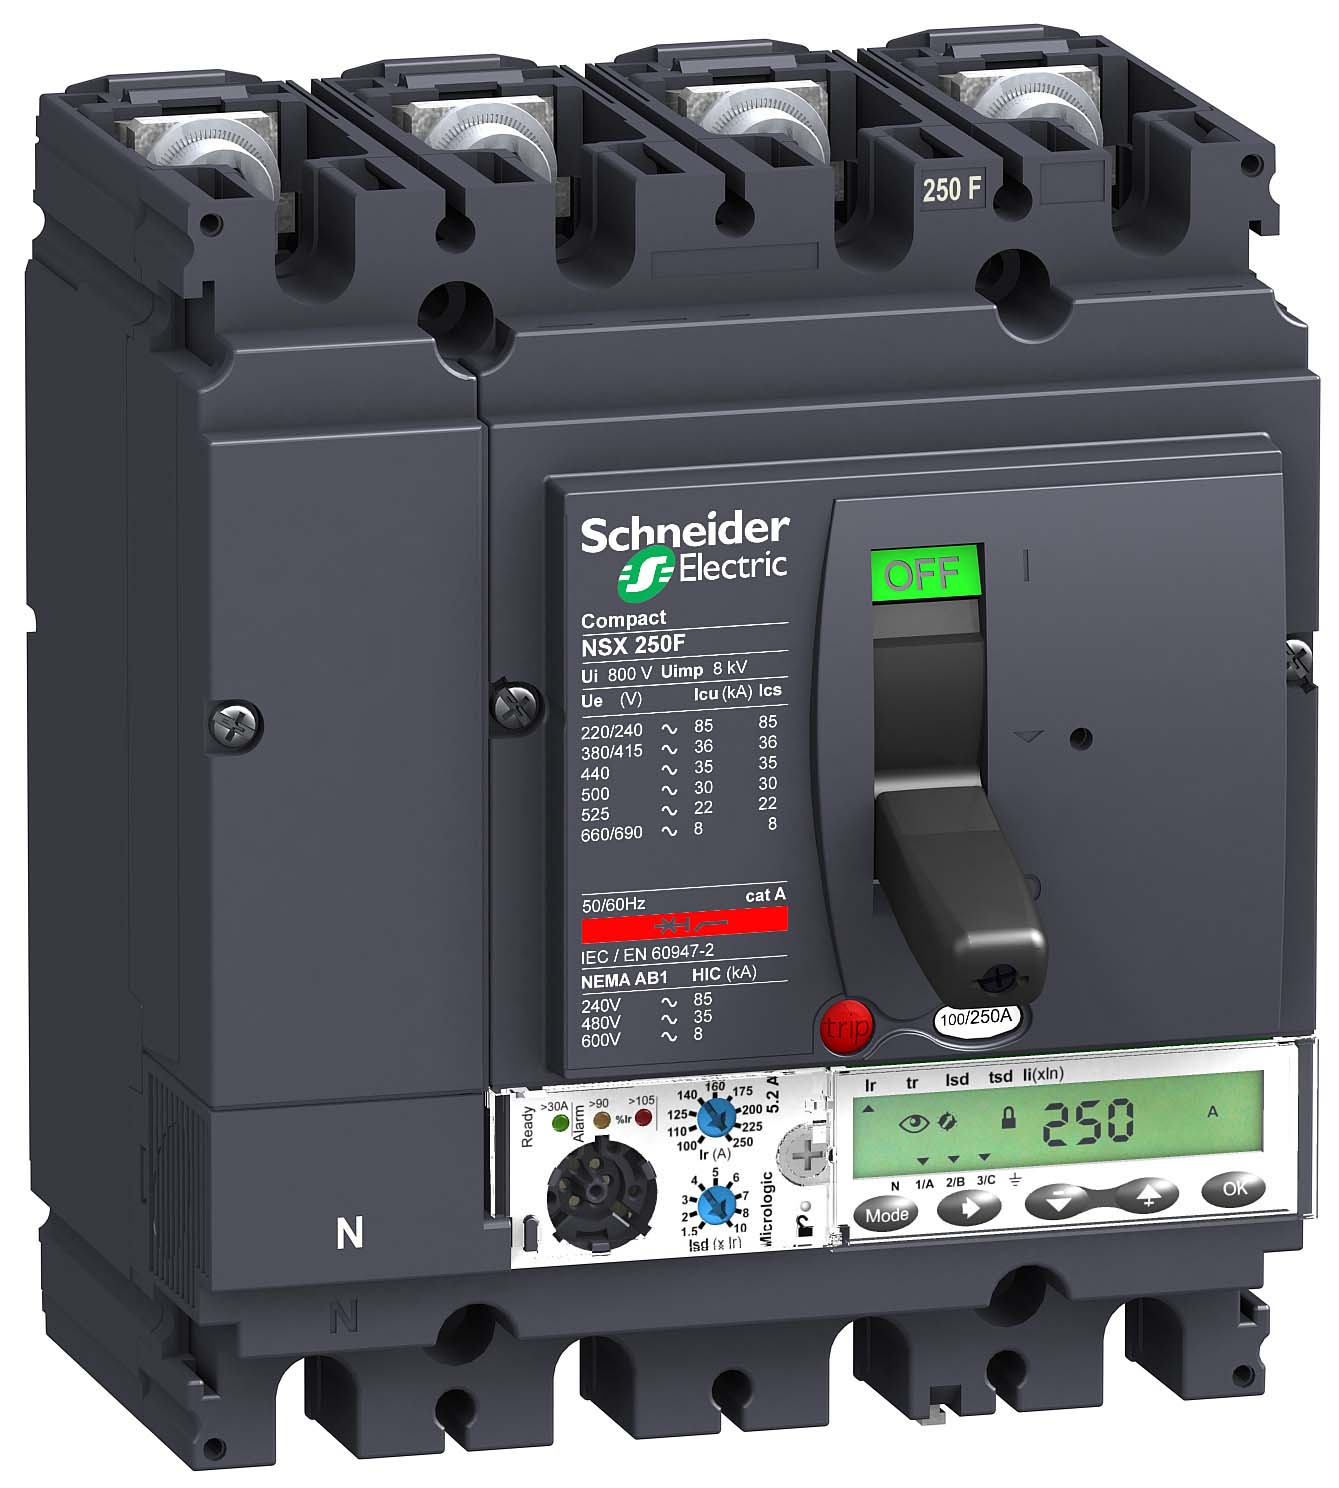 Автоматический выключатель 4П4Т MICR. 5.2A 250A NSX250B LV431155 Schneider Electric